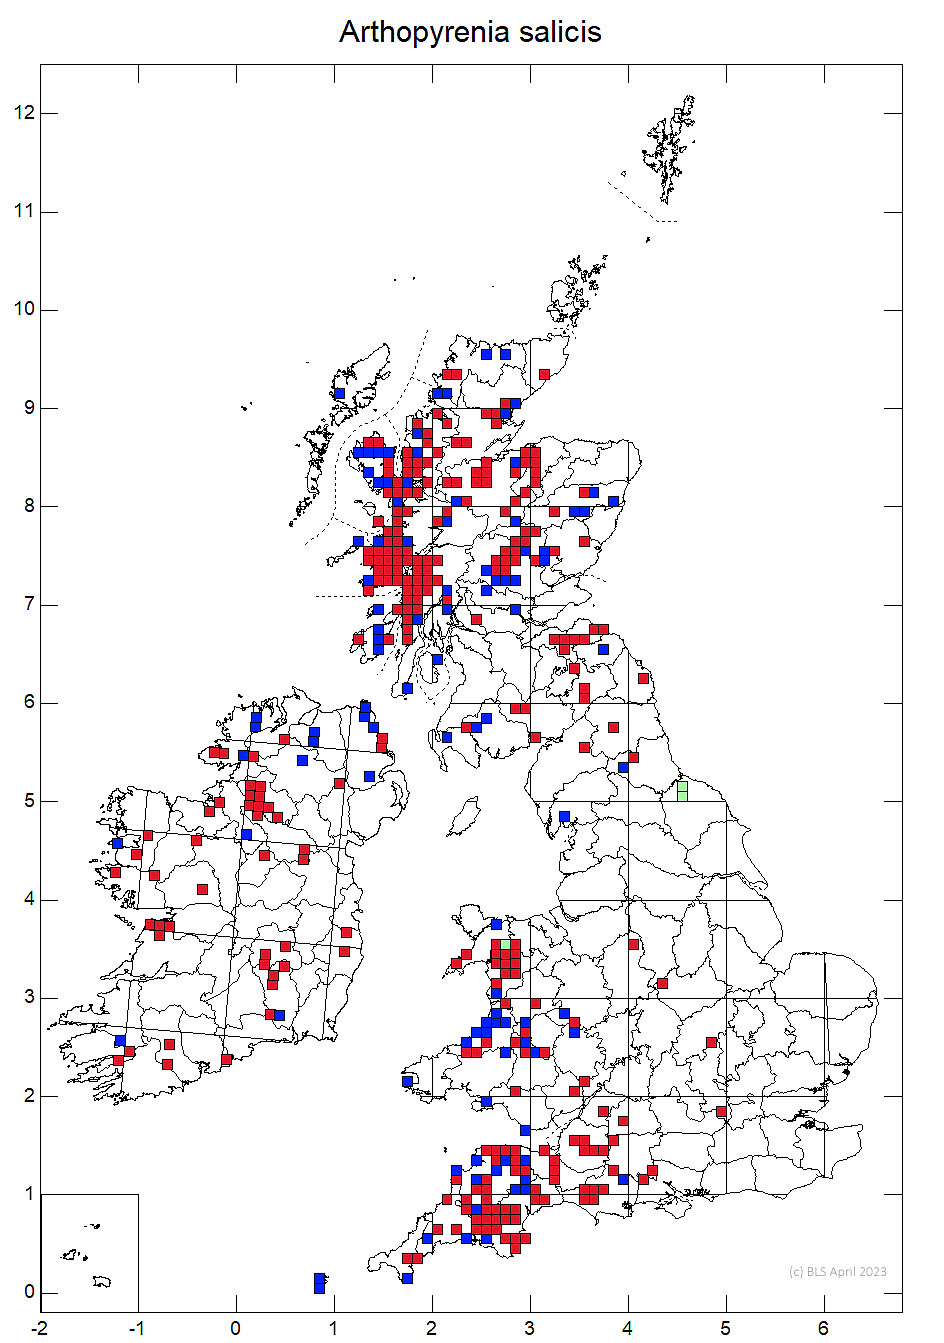 Arthopyrenia salicis 10km sq distribution map